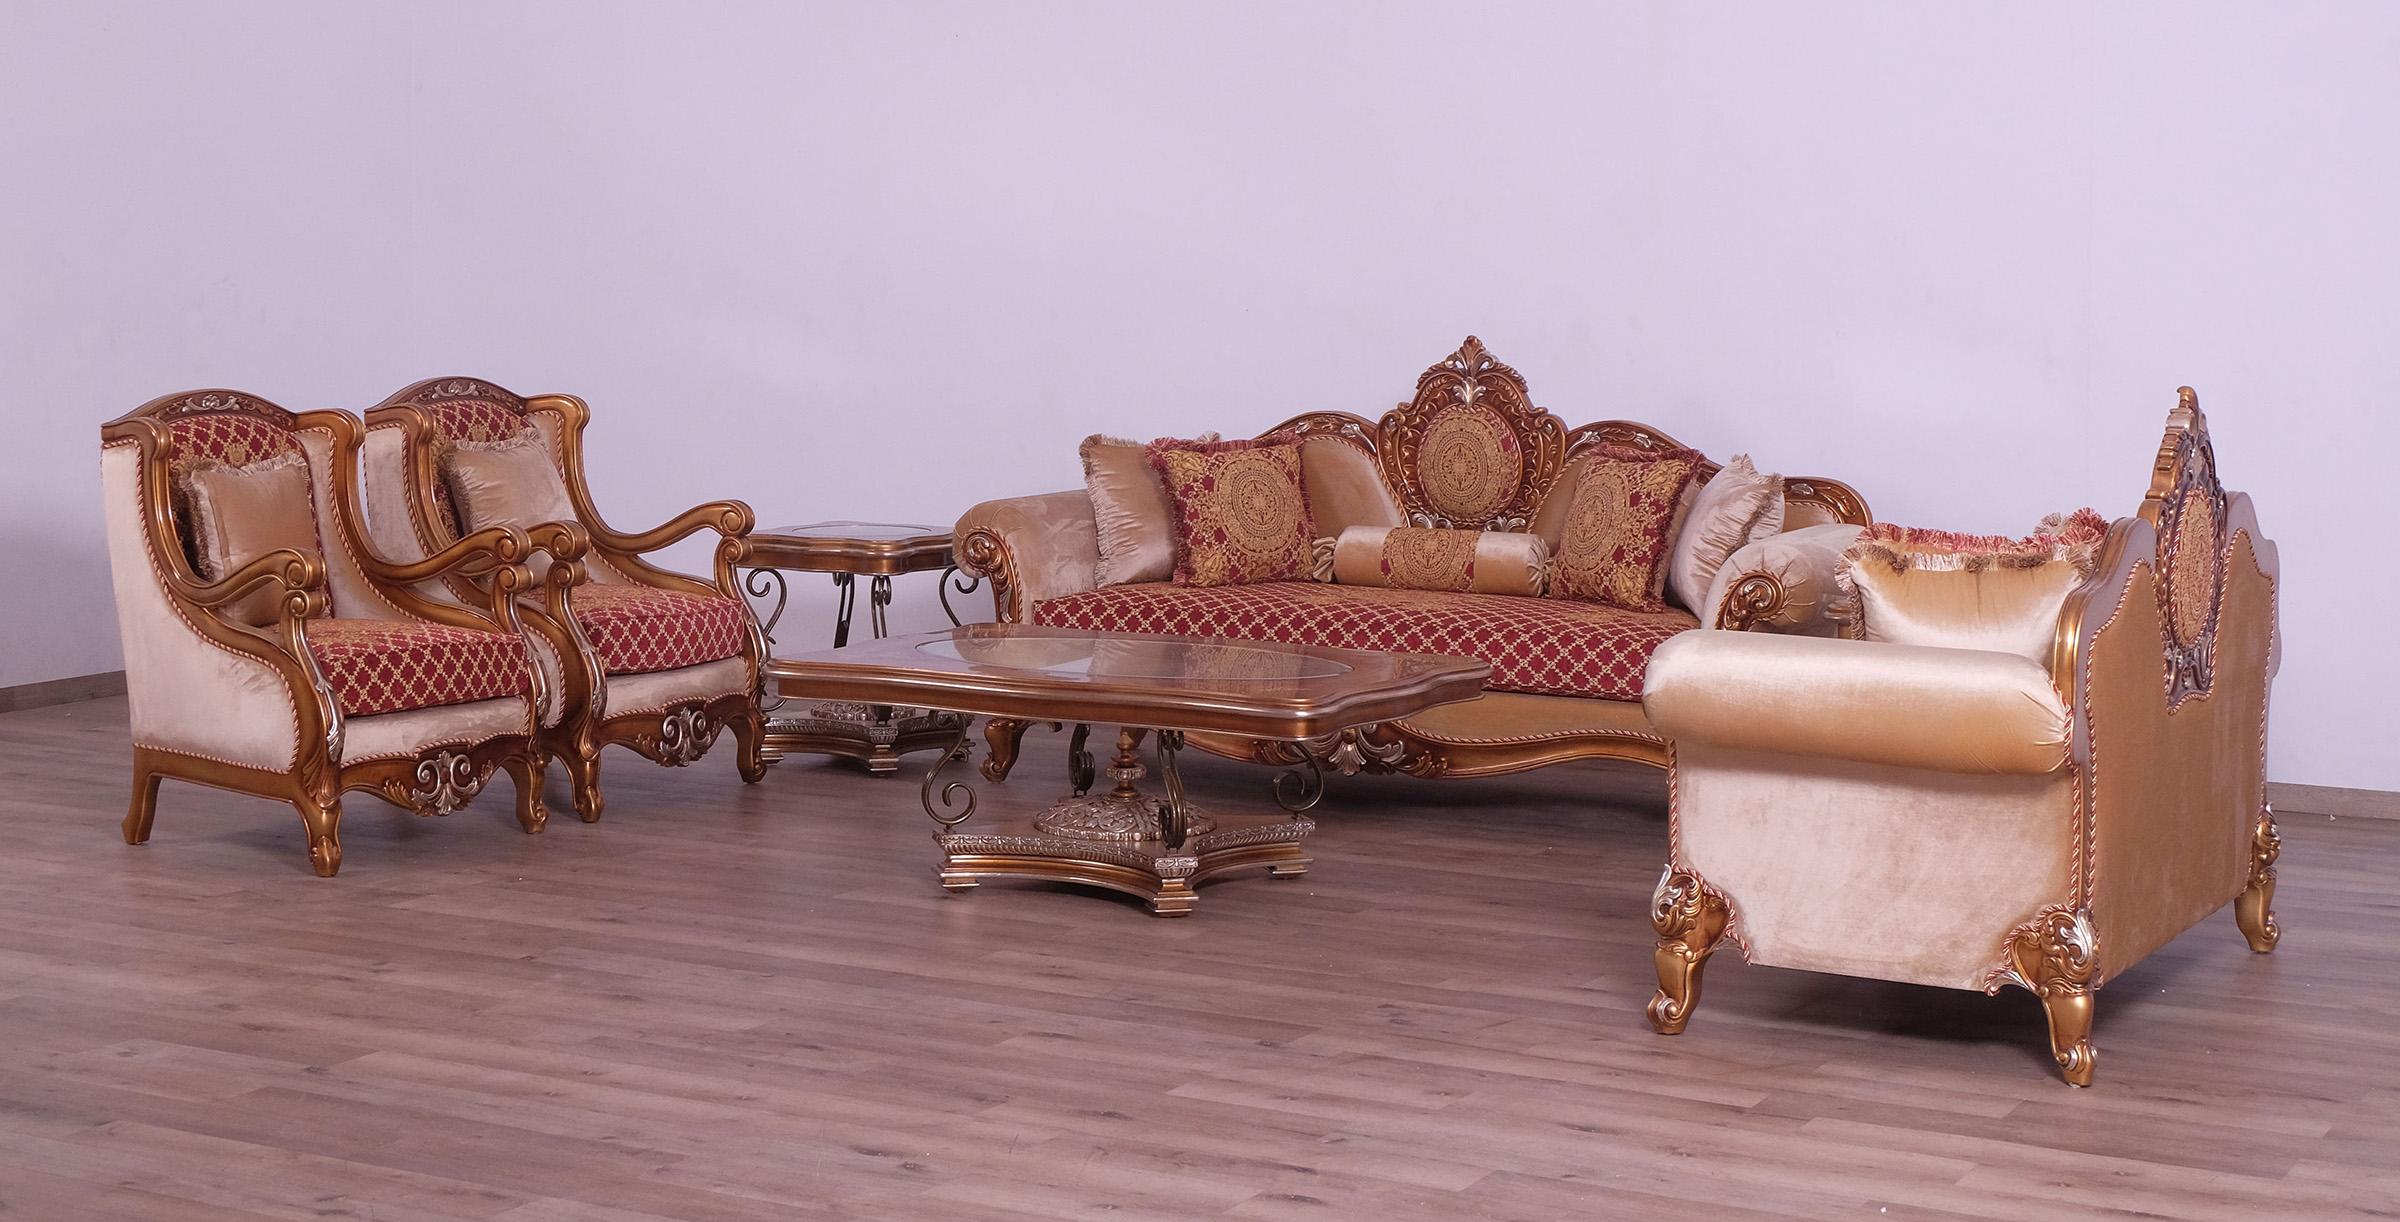 

        
663701291650Imperial Luxury Red Brown & Gold RAFFAELLO III Chair Set 2Pcs EUROPEAN FURNITURE
